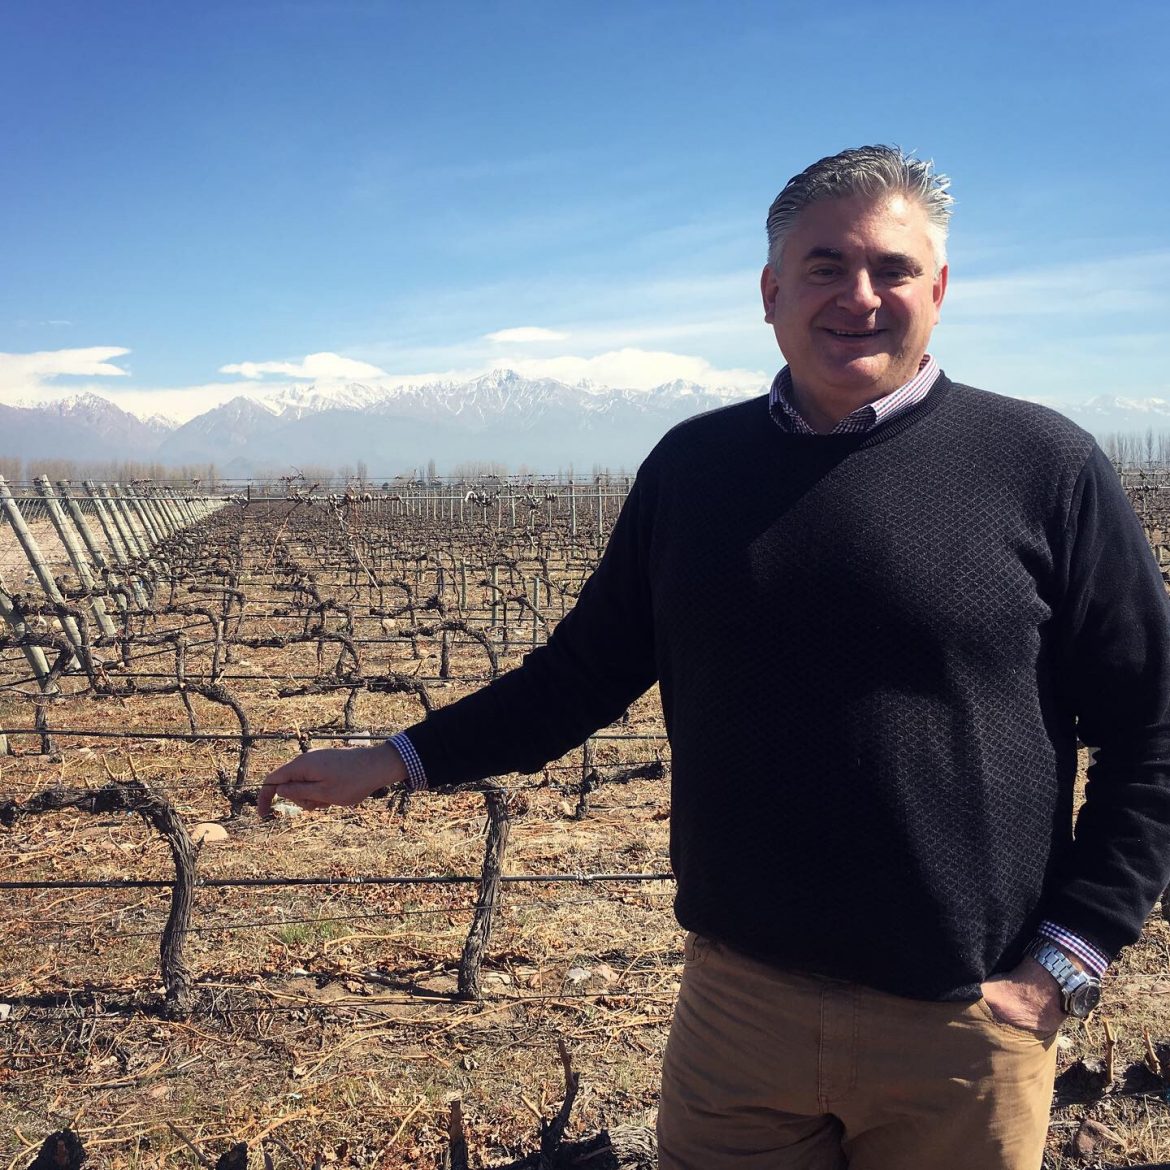 Silvio Alberto in Los Chacayes vineyard comparing terroir with San Rafael. Bianchi wine interview